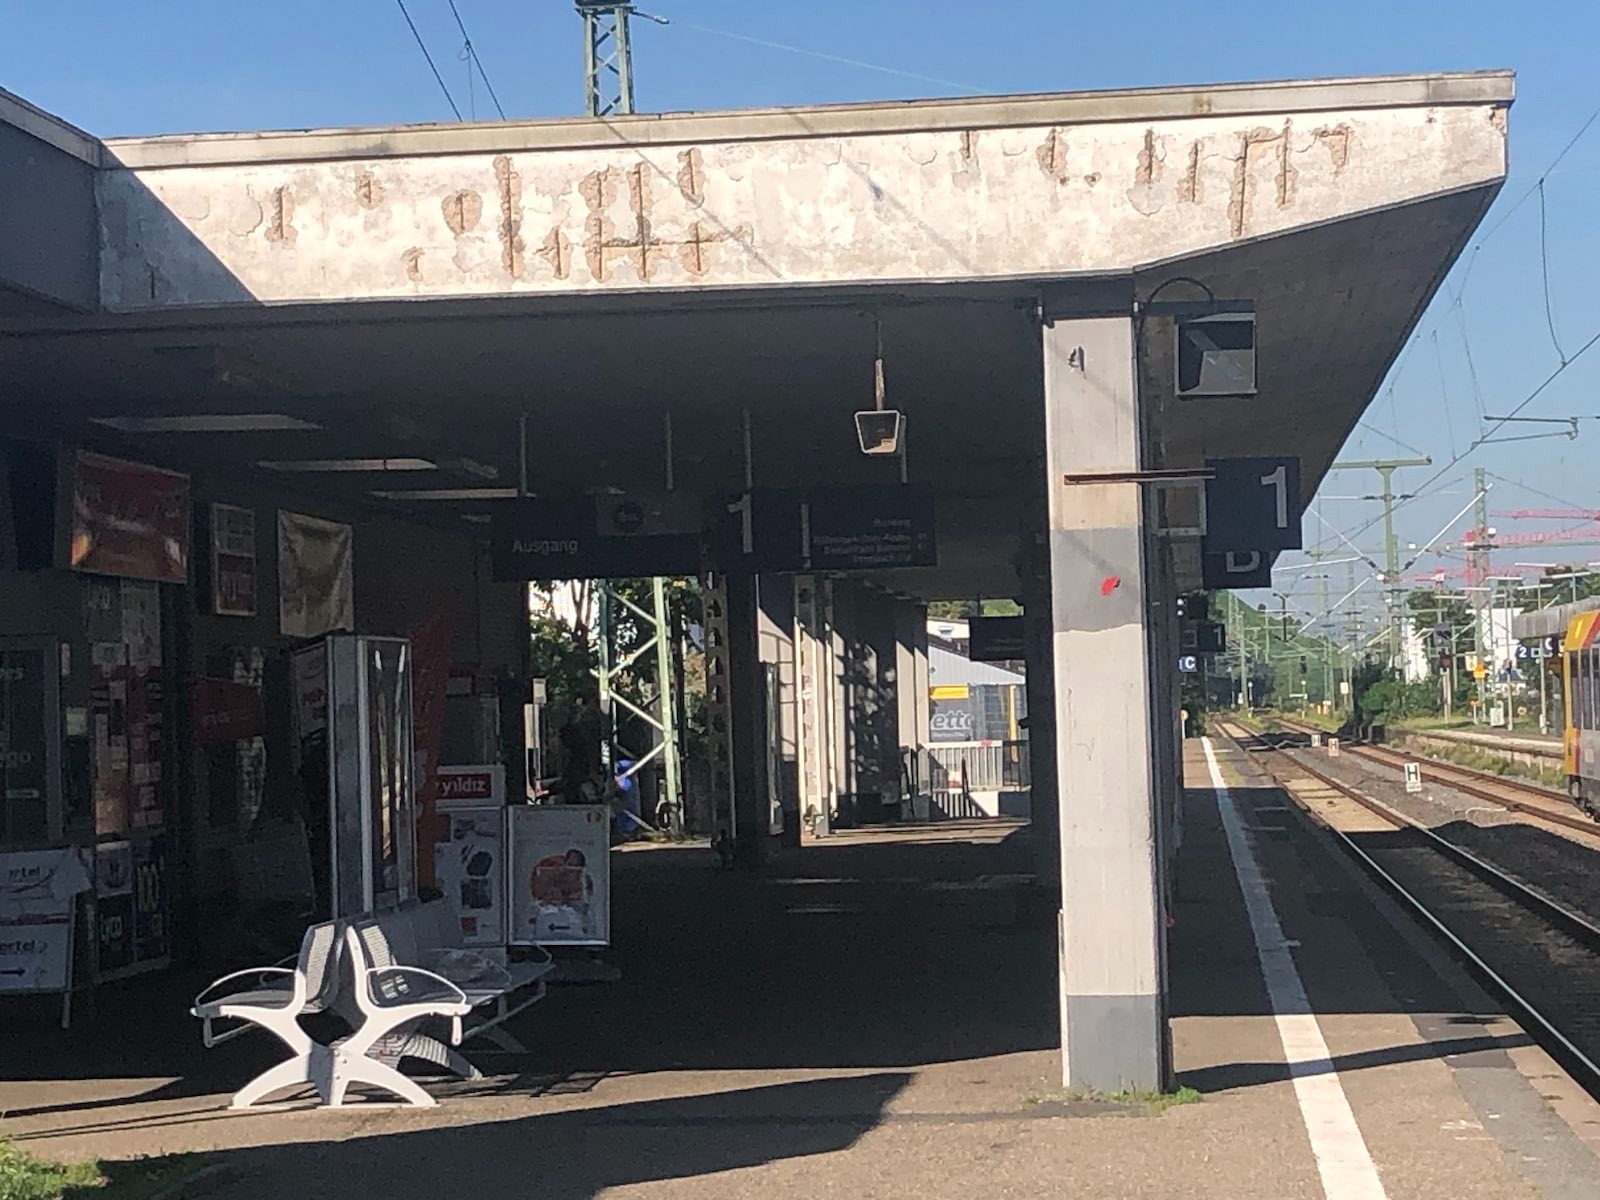 Verlassene Bahnsteige am S-Bahnhof Griesheim